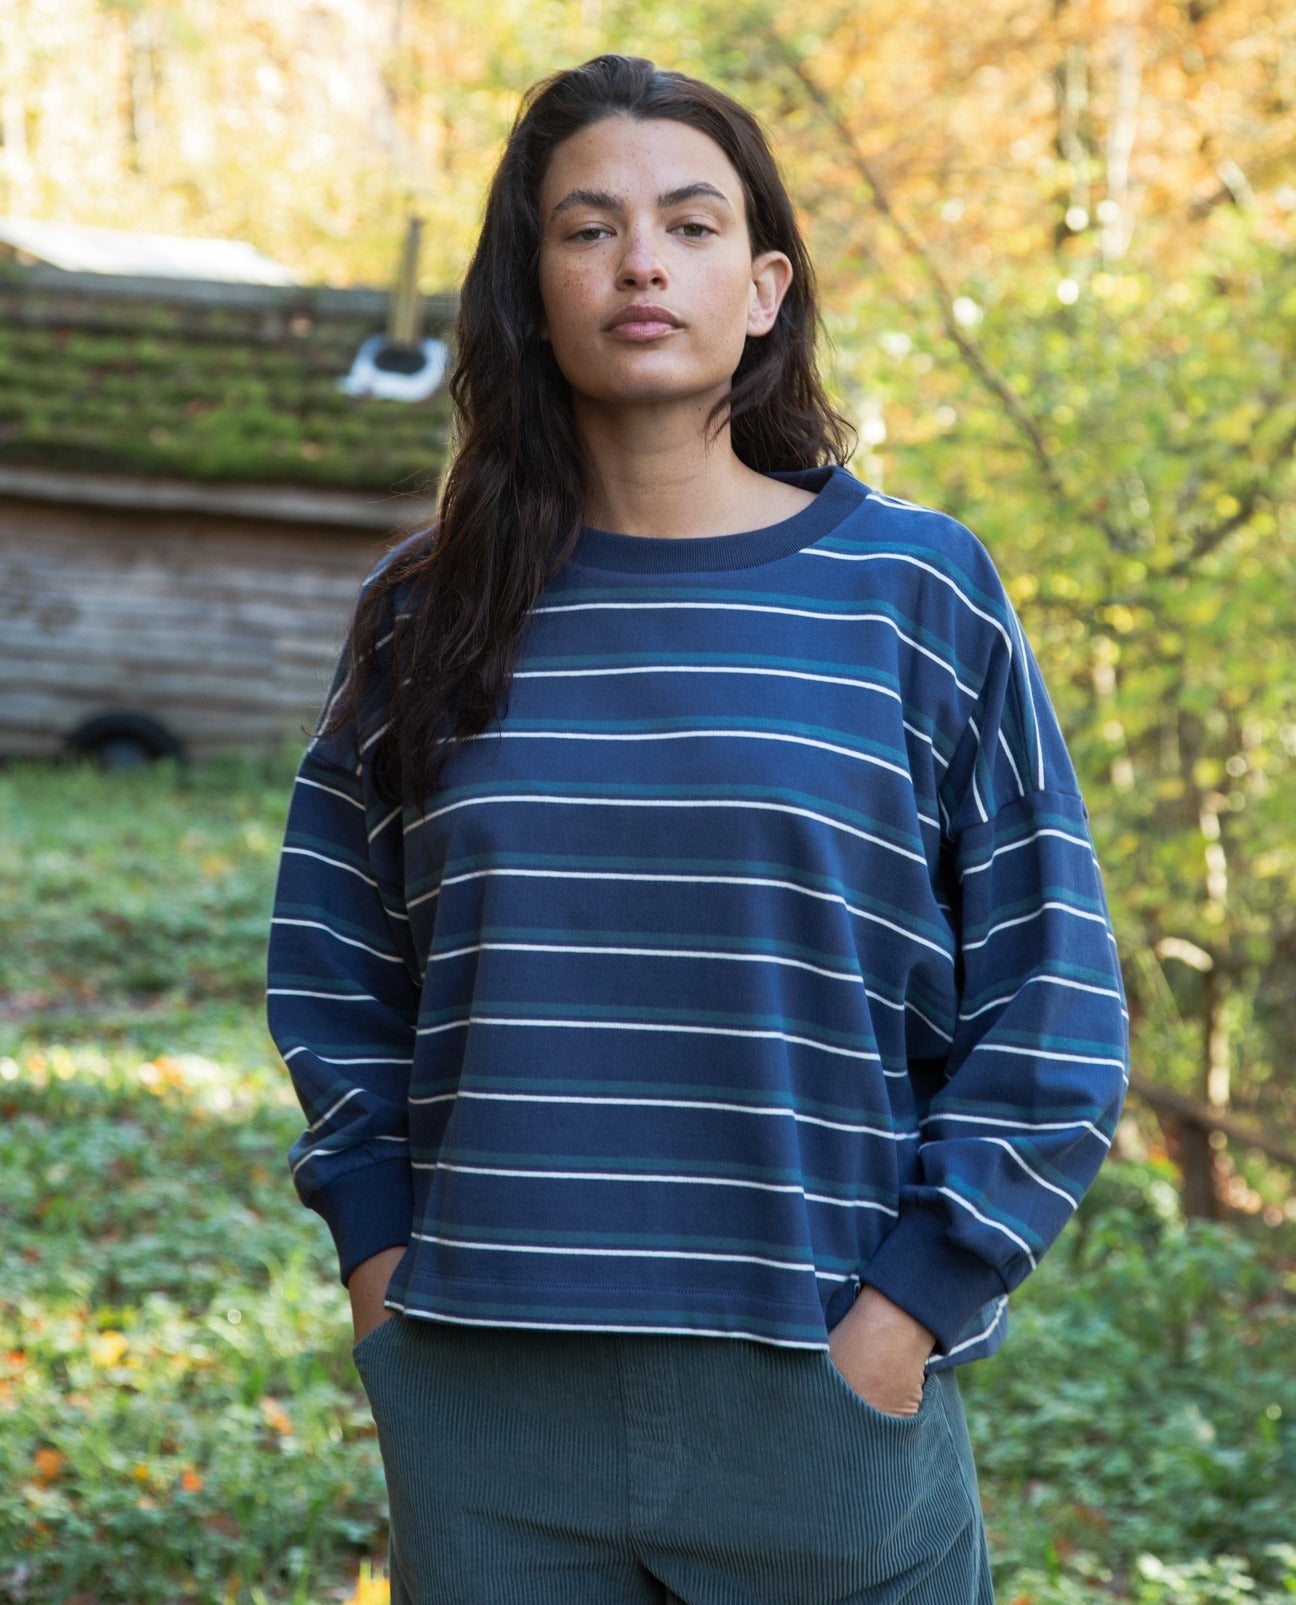 Serenity-Sue Organic Cotton Sweatshirt in Petrol and Off White Stripe